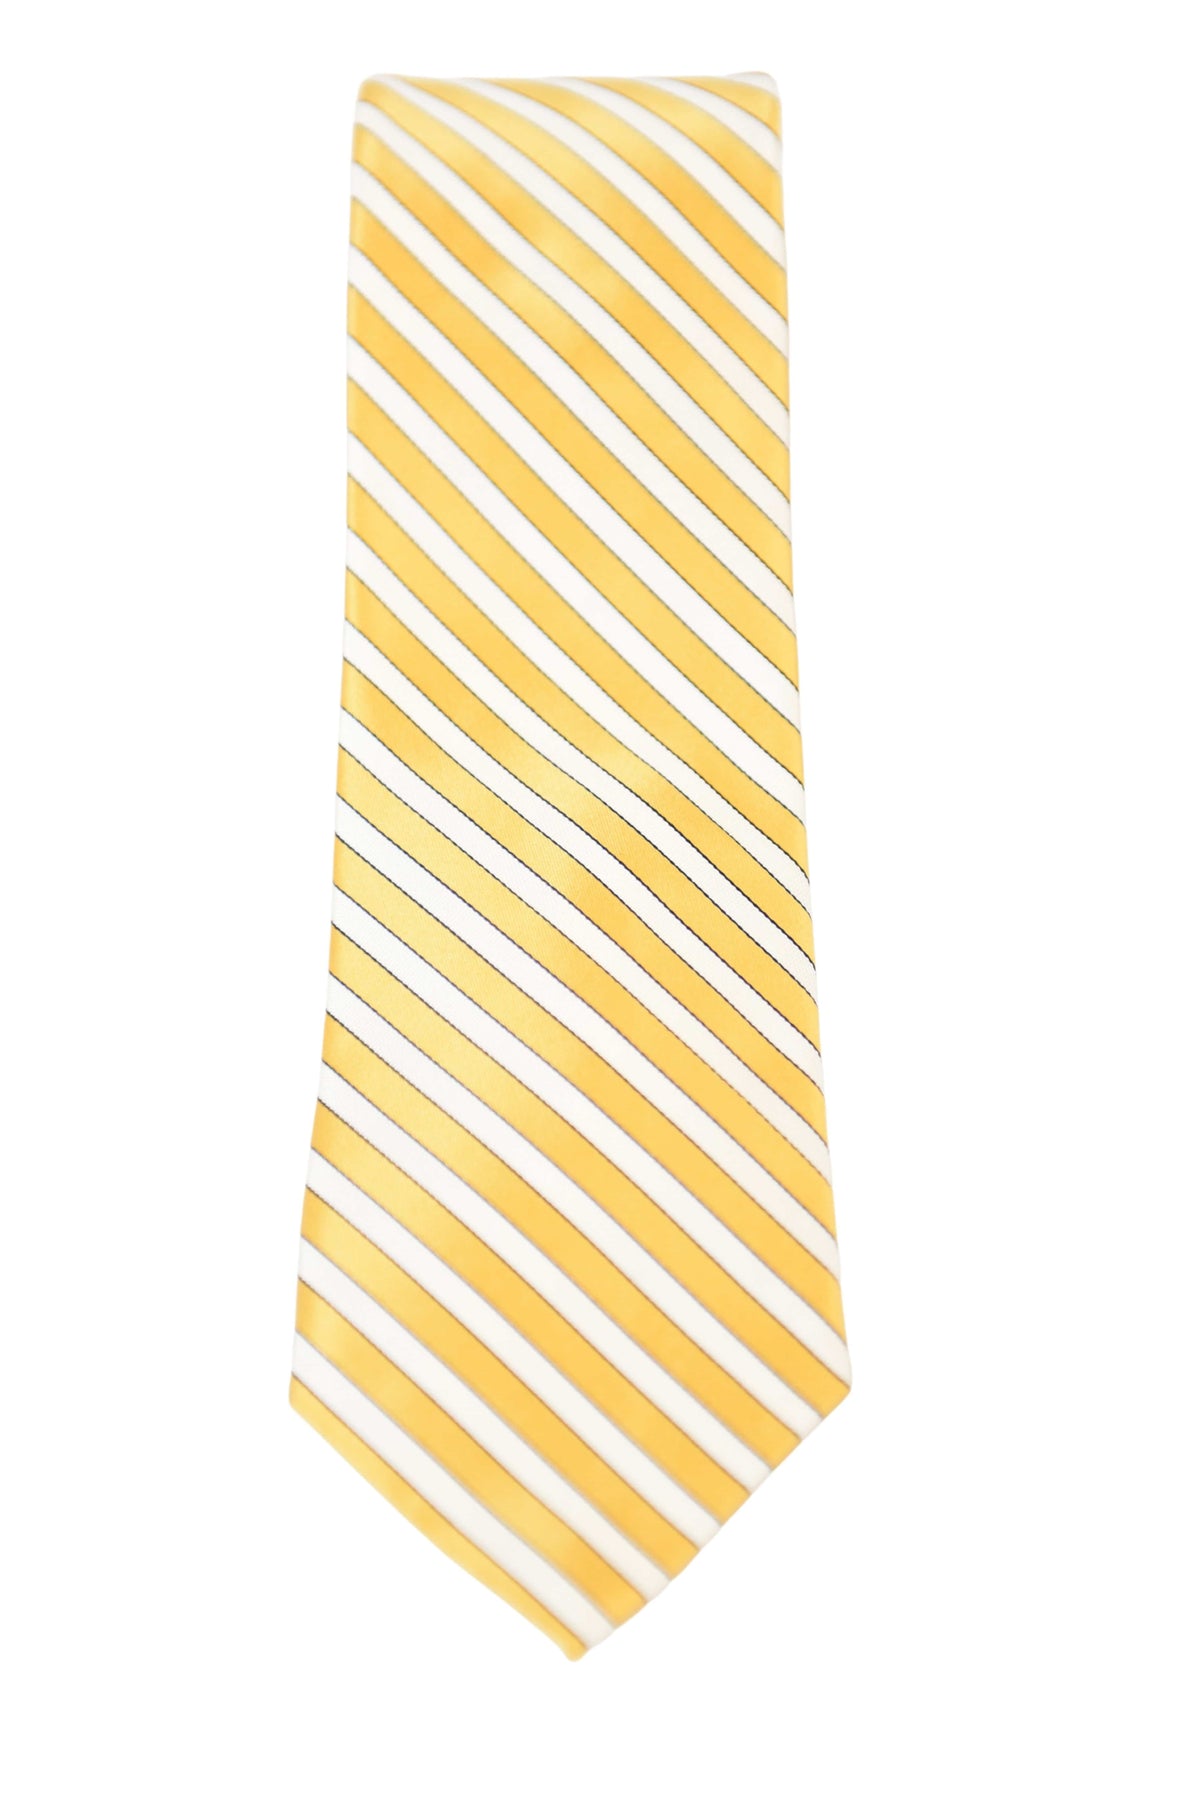 The Suit Depot Yellow Stripes Arthur Black Premium Silk Tie